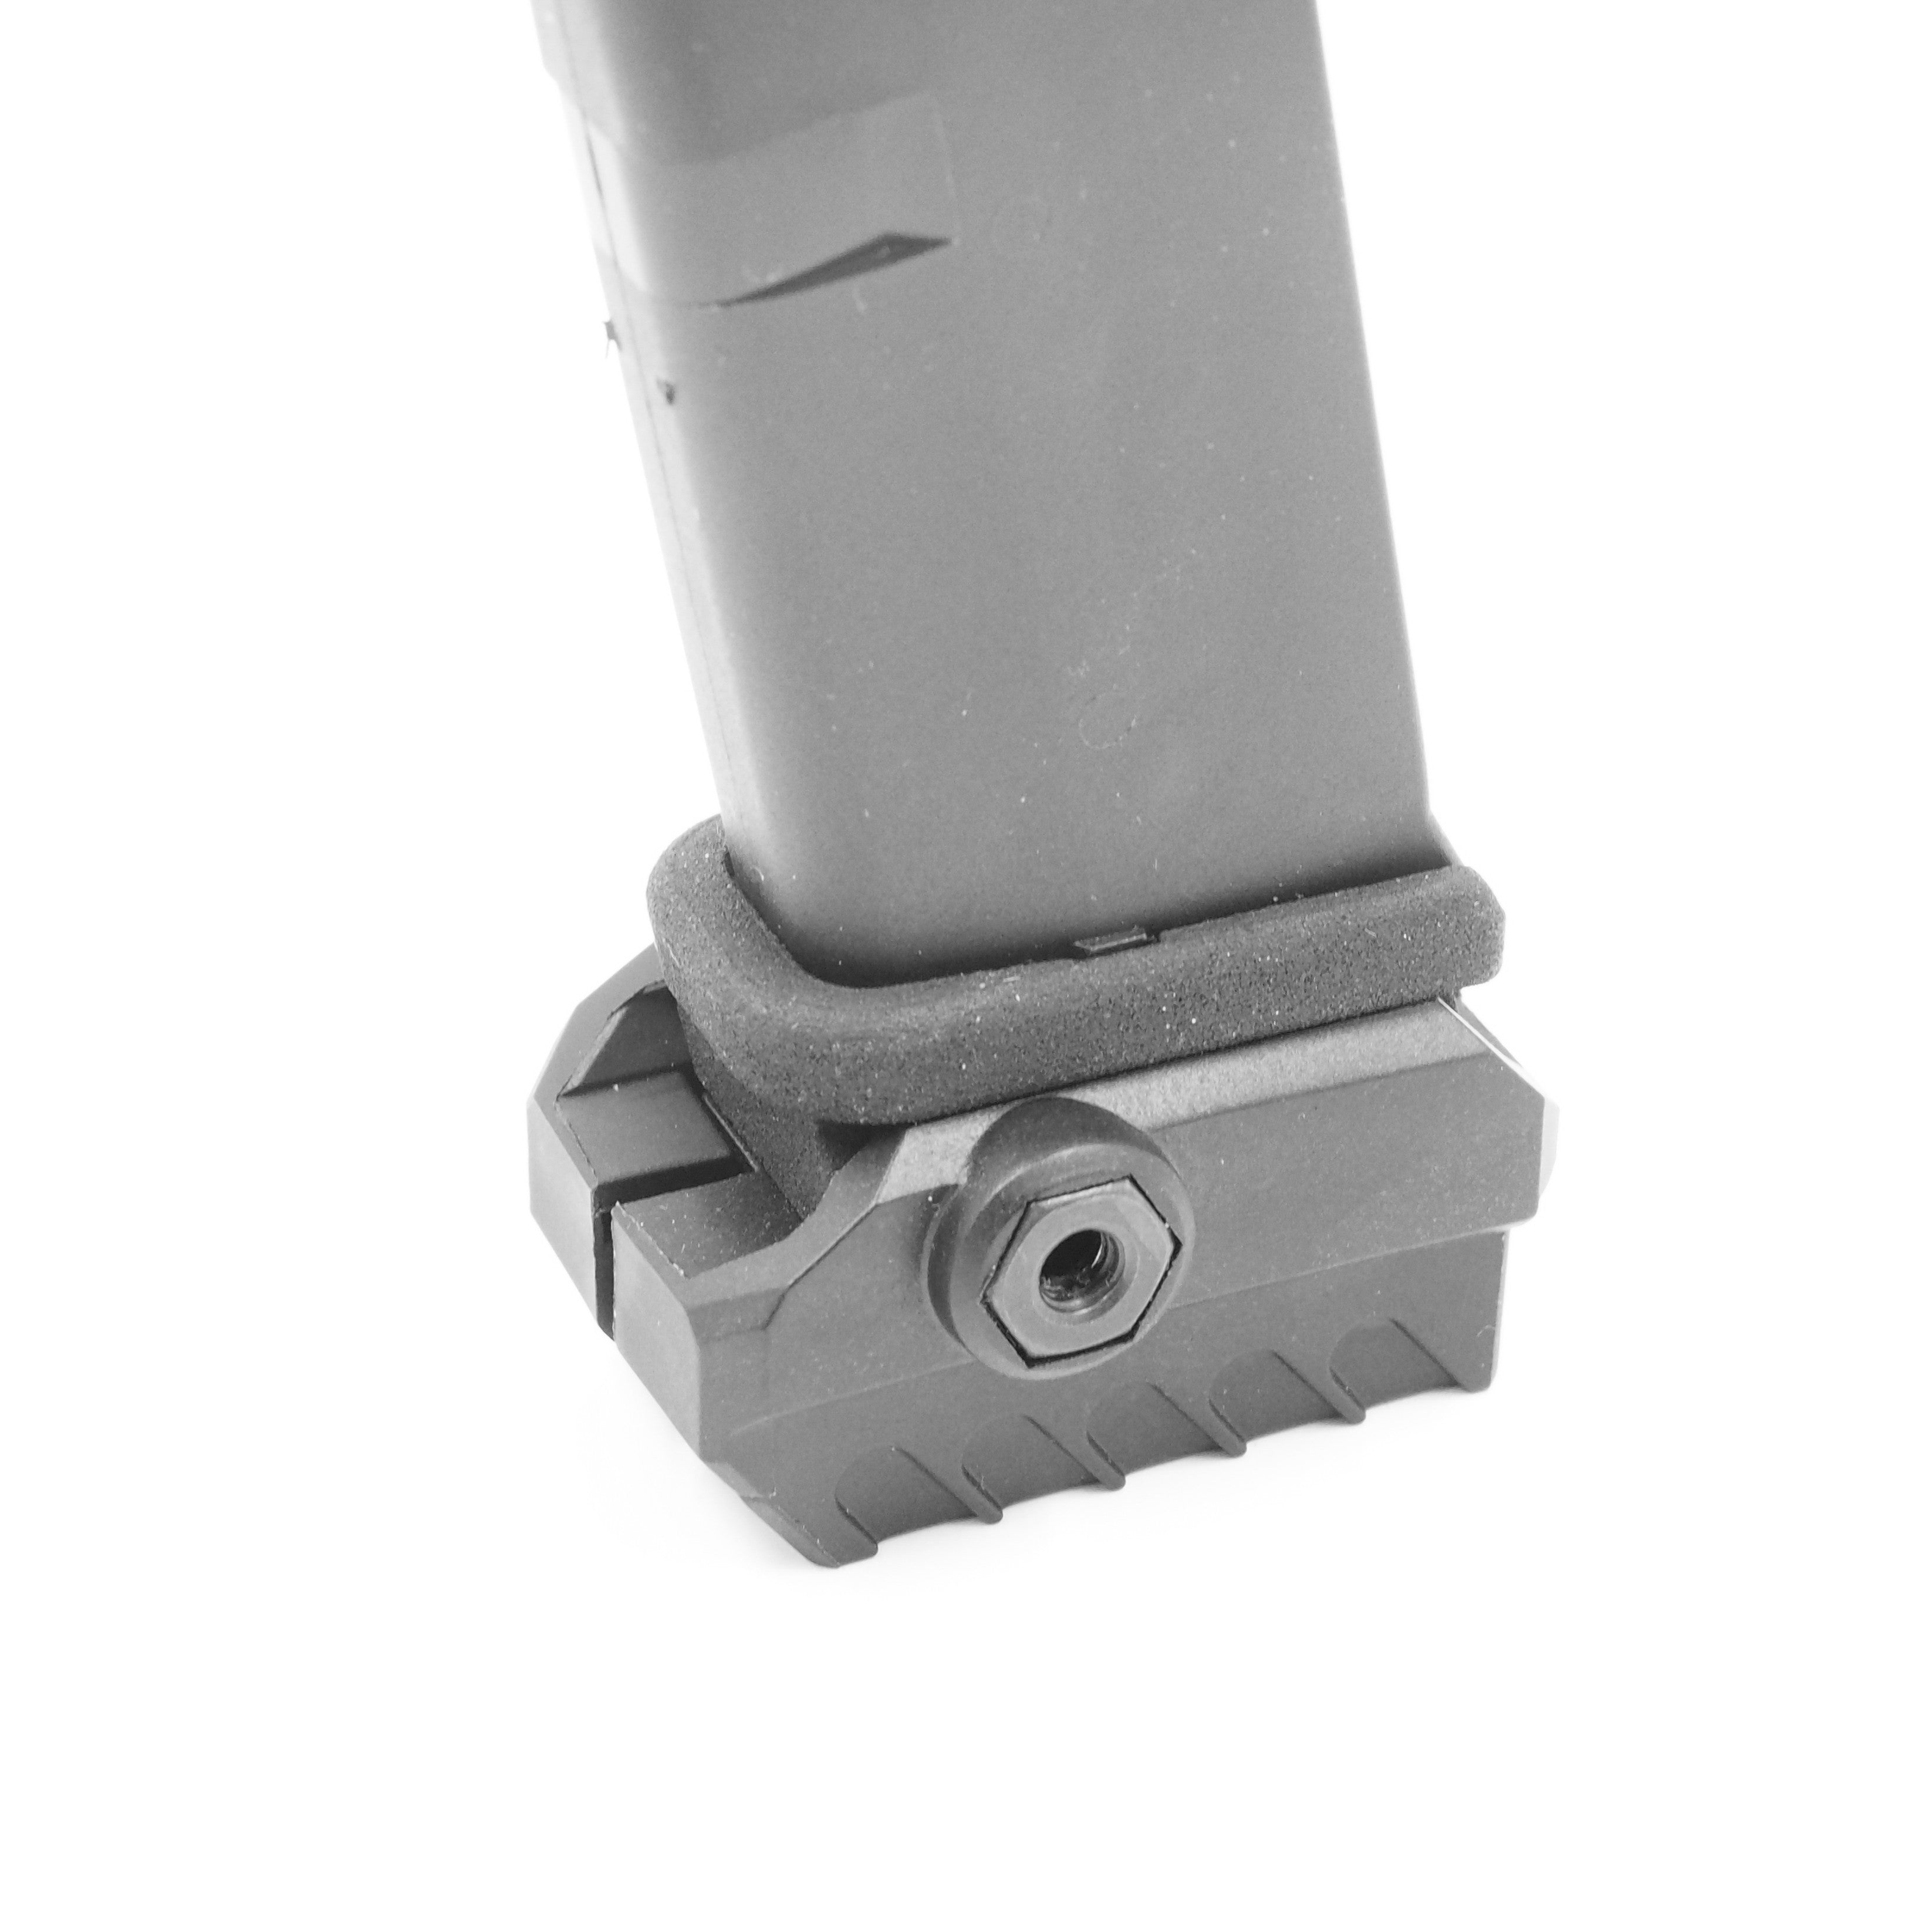 MagRail - Glock 43 - Magazine Floor Plate Rail Adapter - Mantis